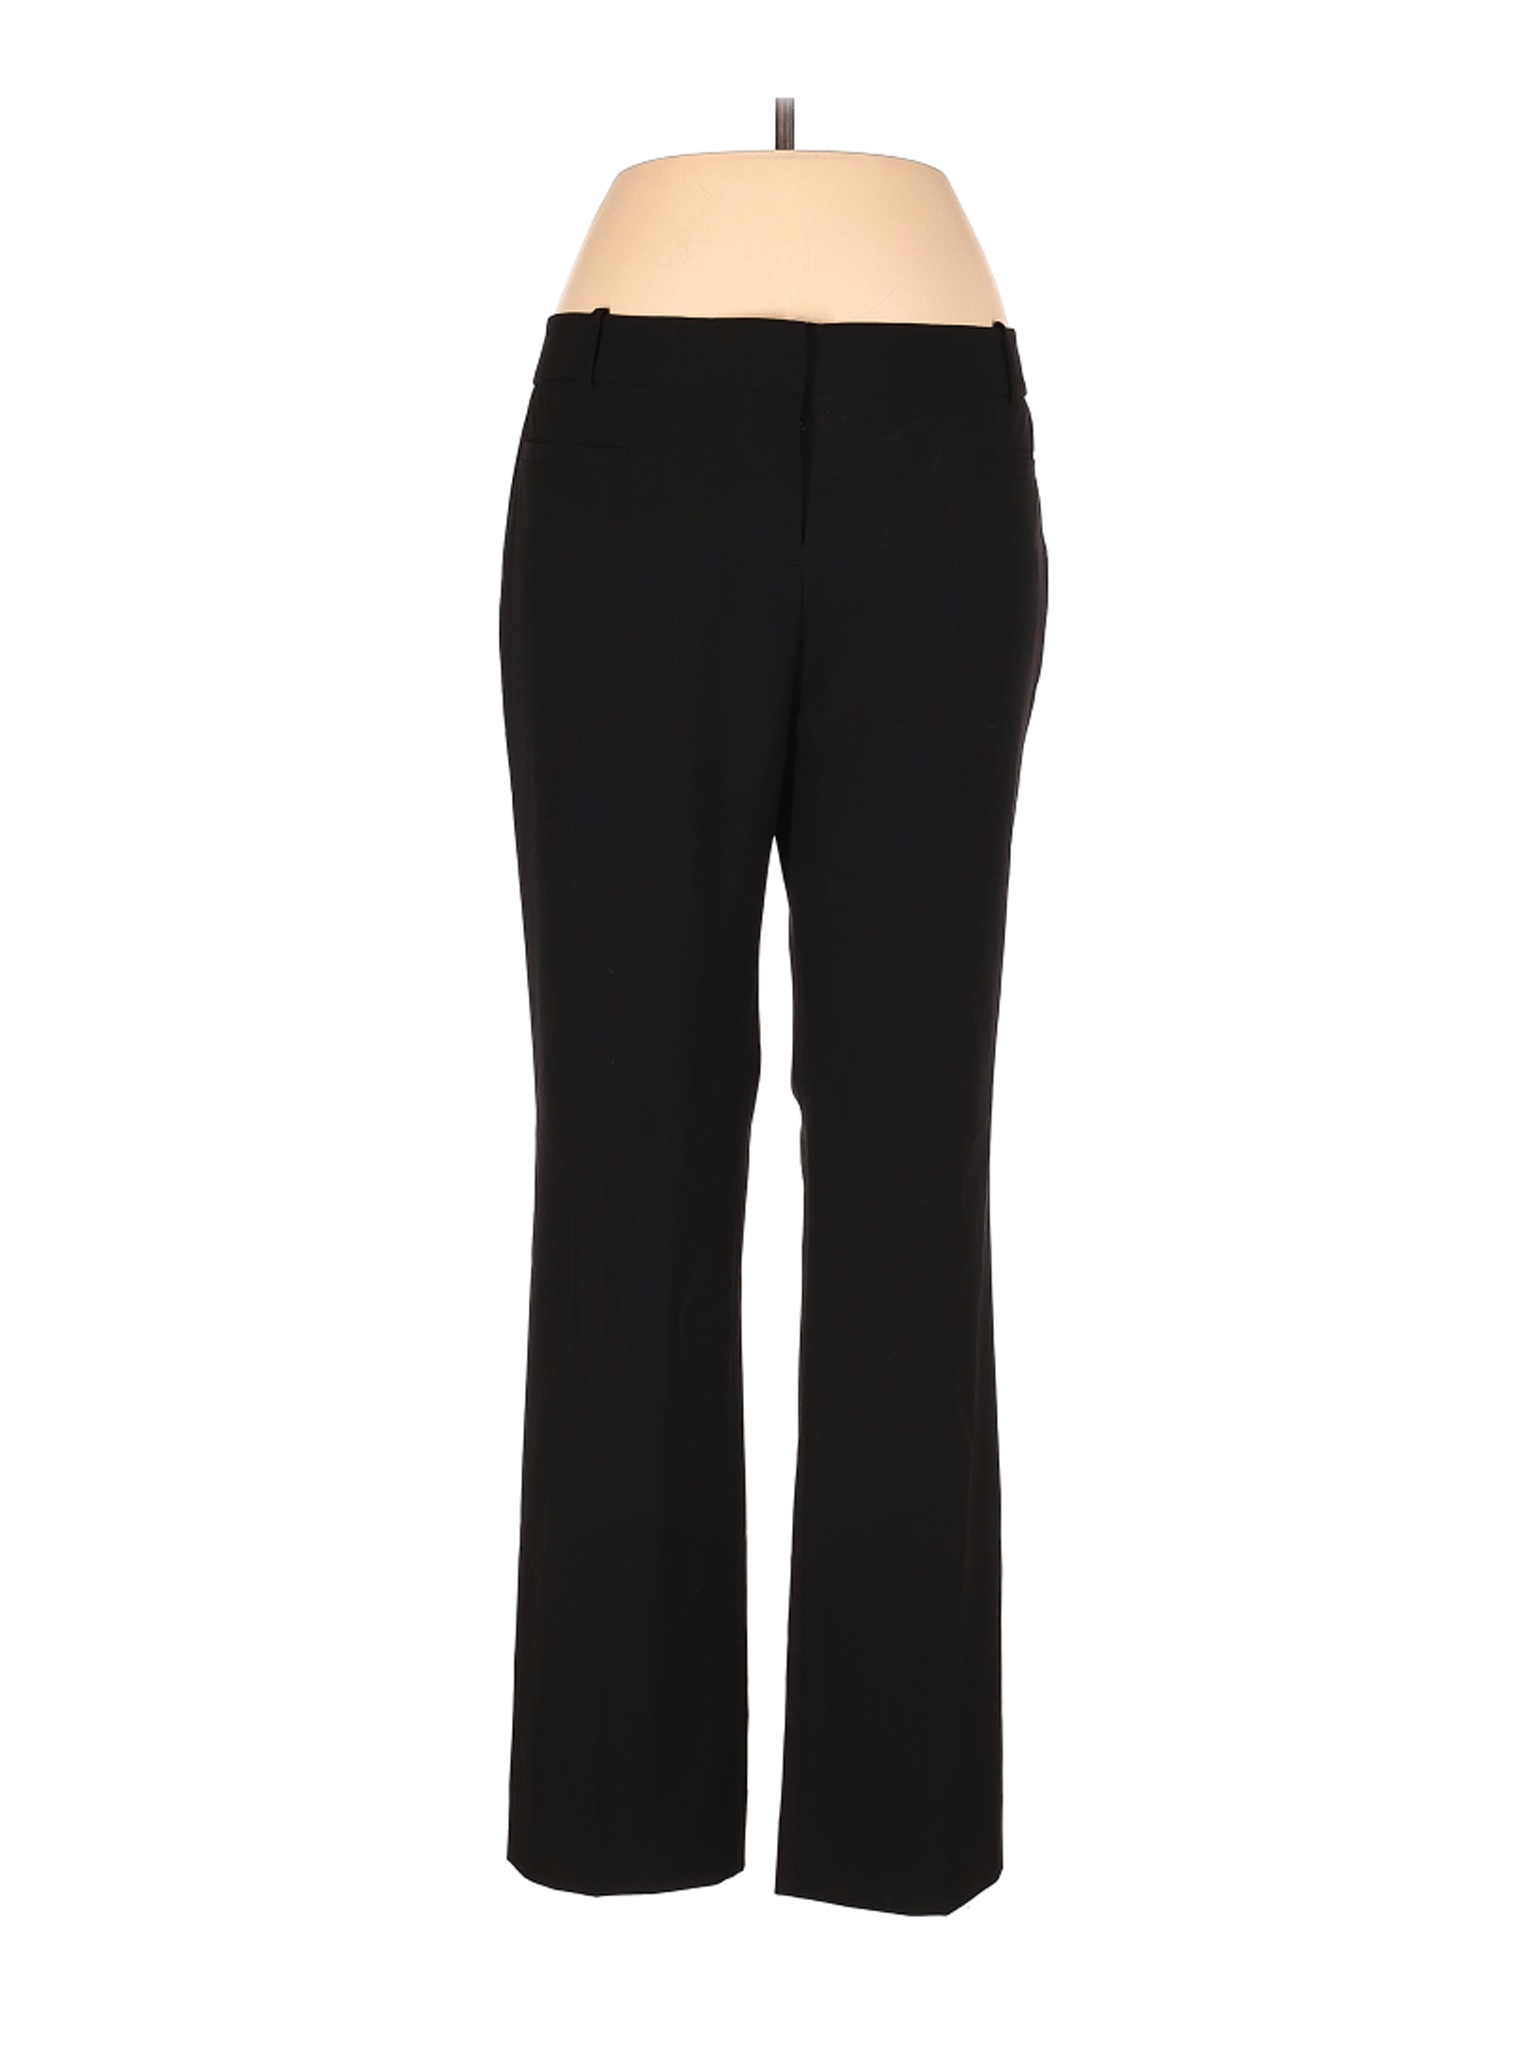 The Limited Women Black Dress Pants 12 Petites | eBay